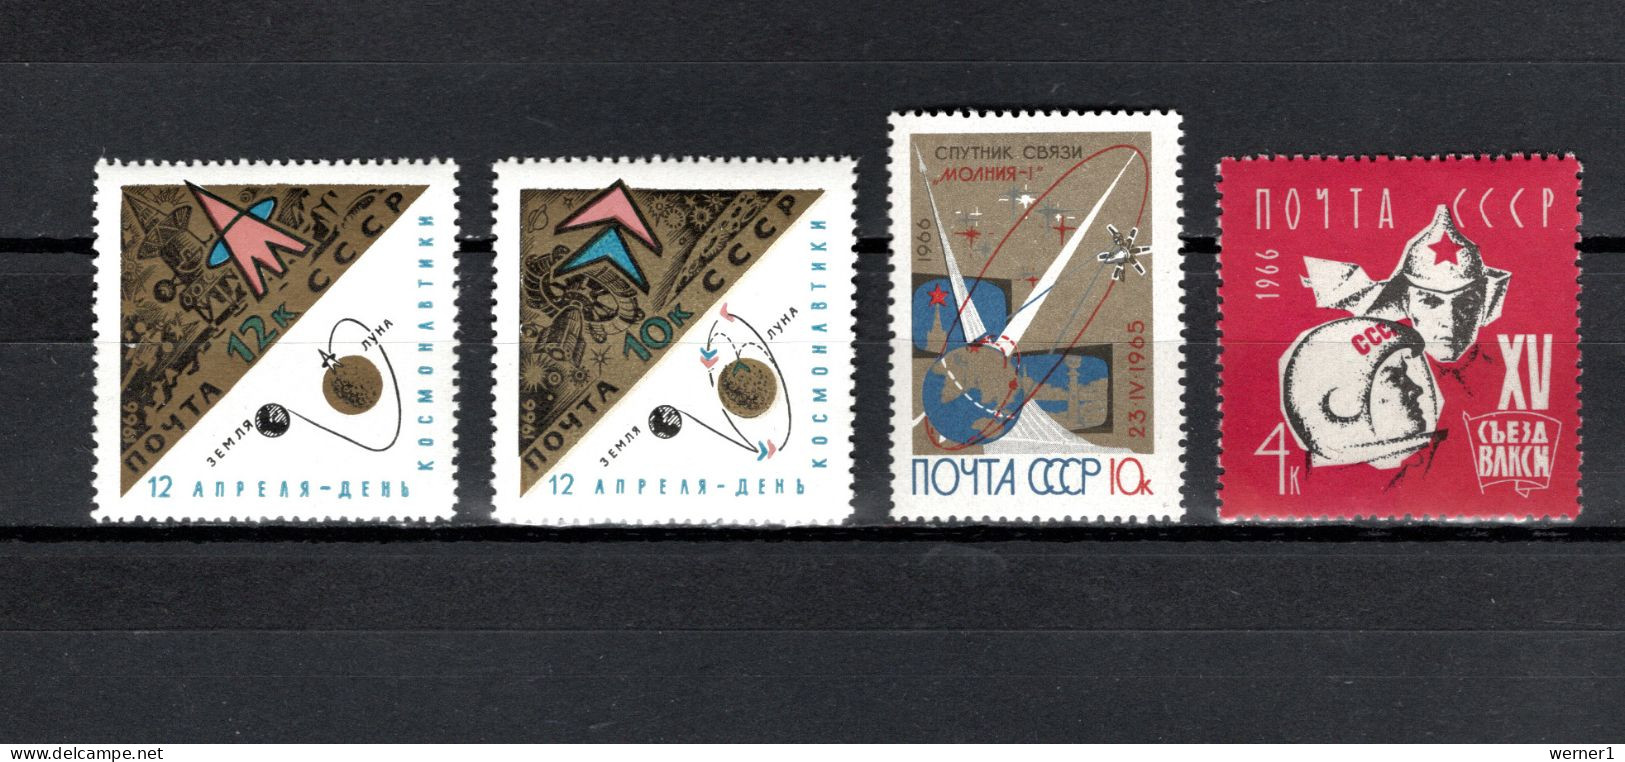 USSR Russia 1966 Space, Cosmonautic Day, Molnija 1, Komsomol, 4 Stamps MNH - Rusia & URSS